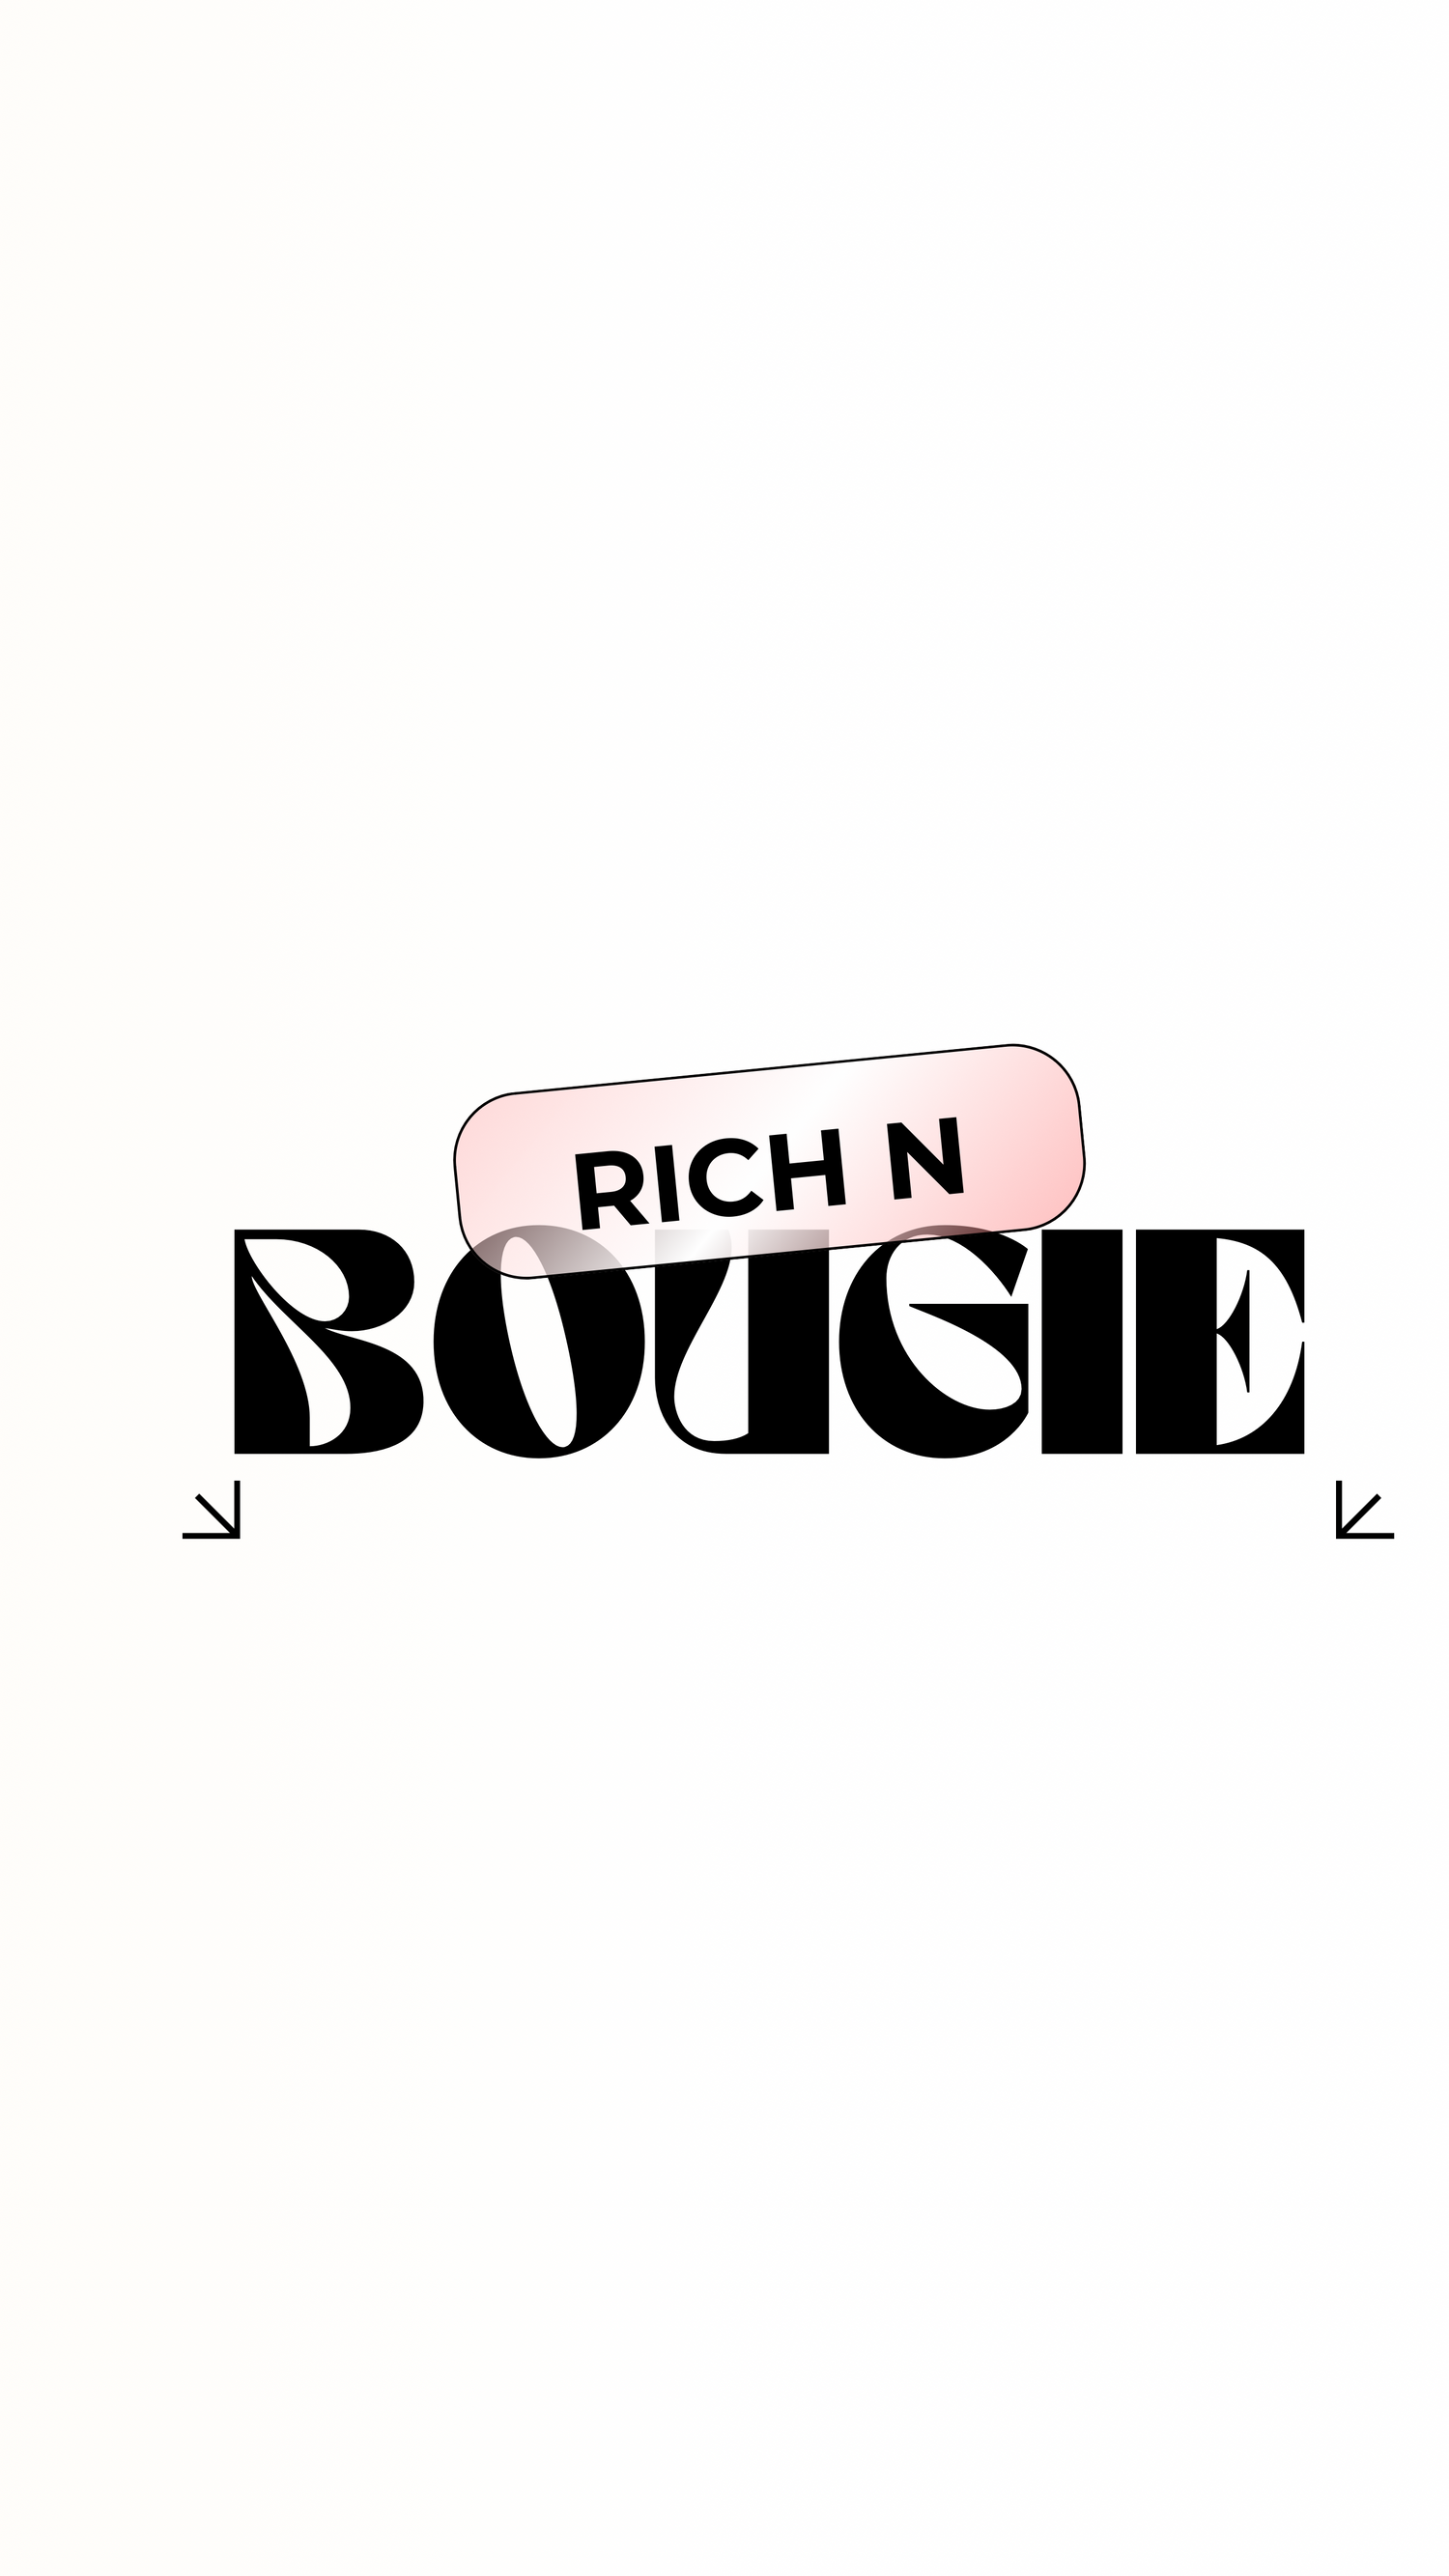 Rich n Bougie